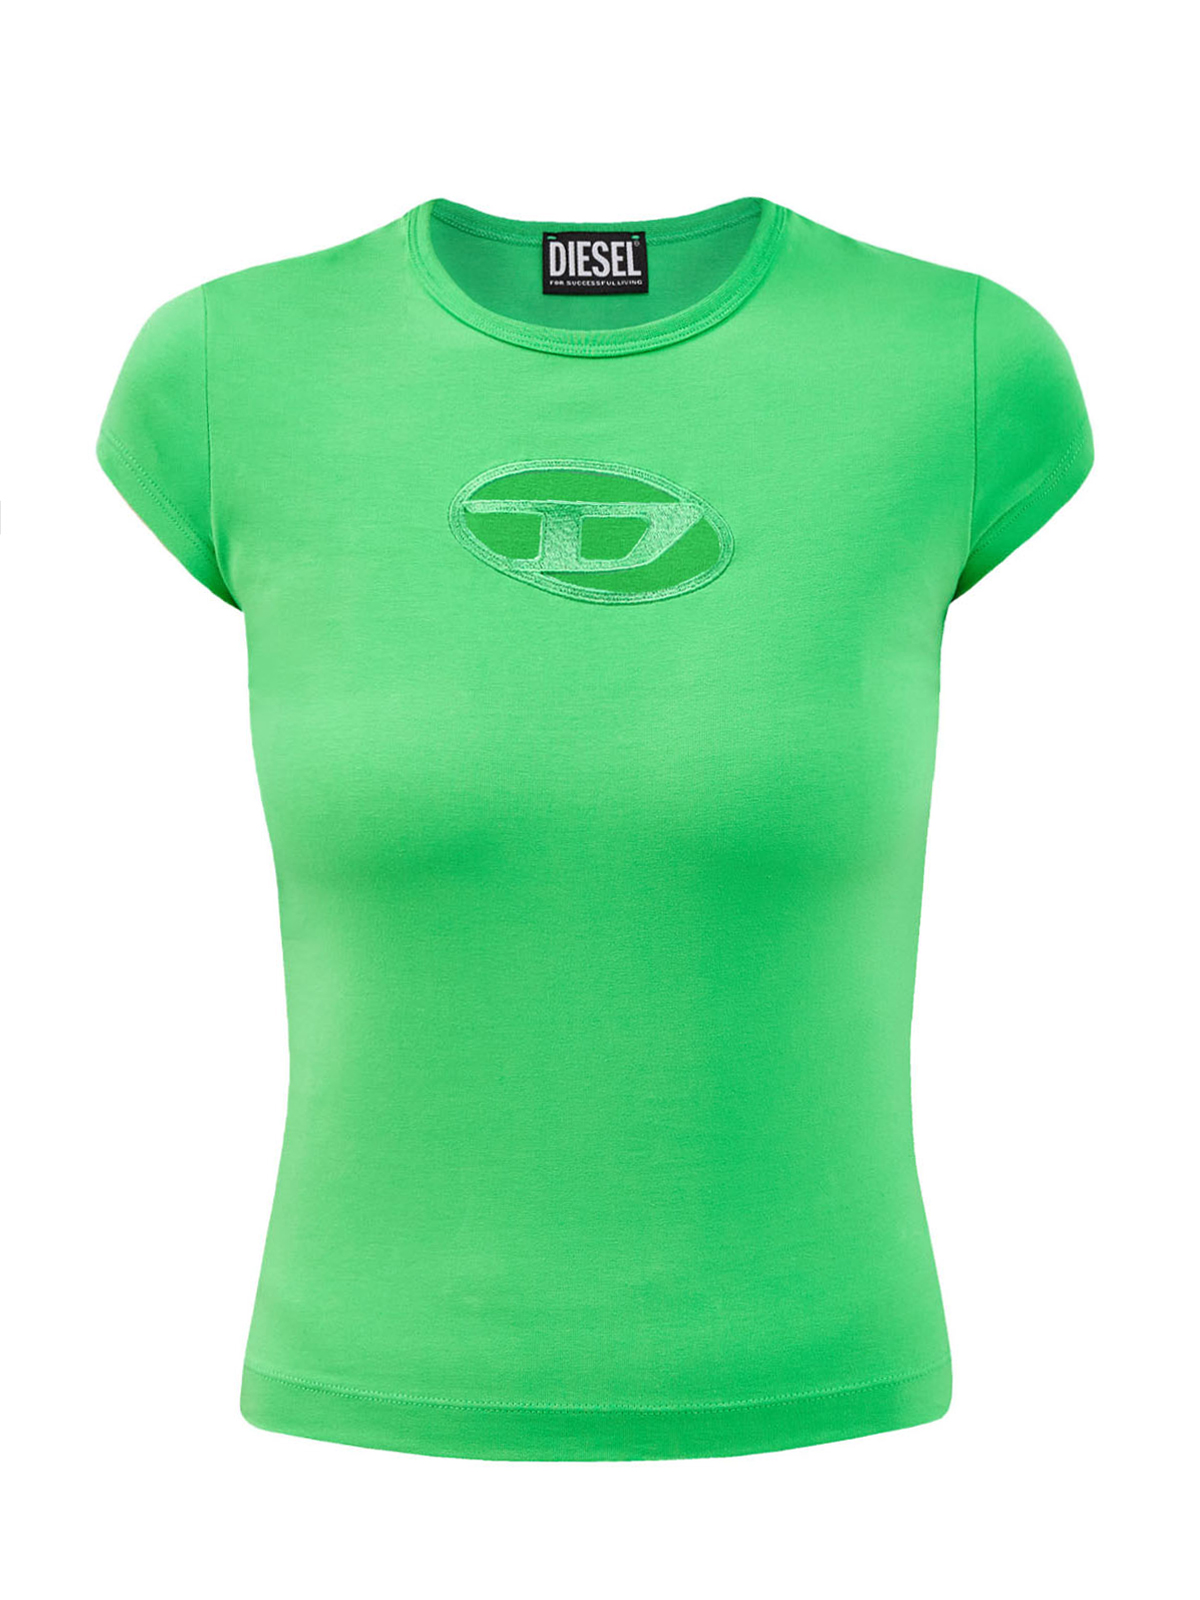 Хлопковая футболка T-Angie с вышитым лазерным логотипом DIESEL, цвет зеленый, размер M;S